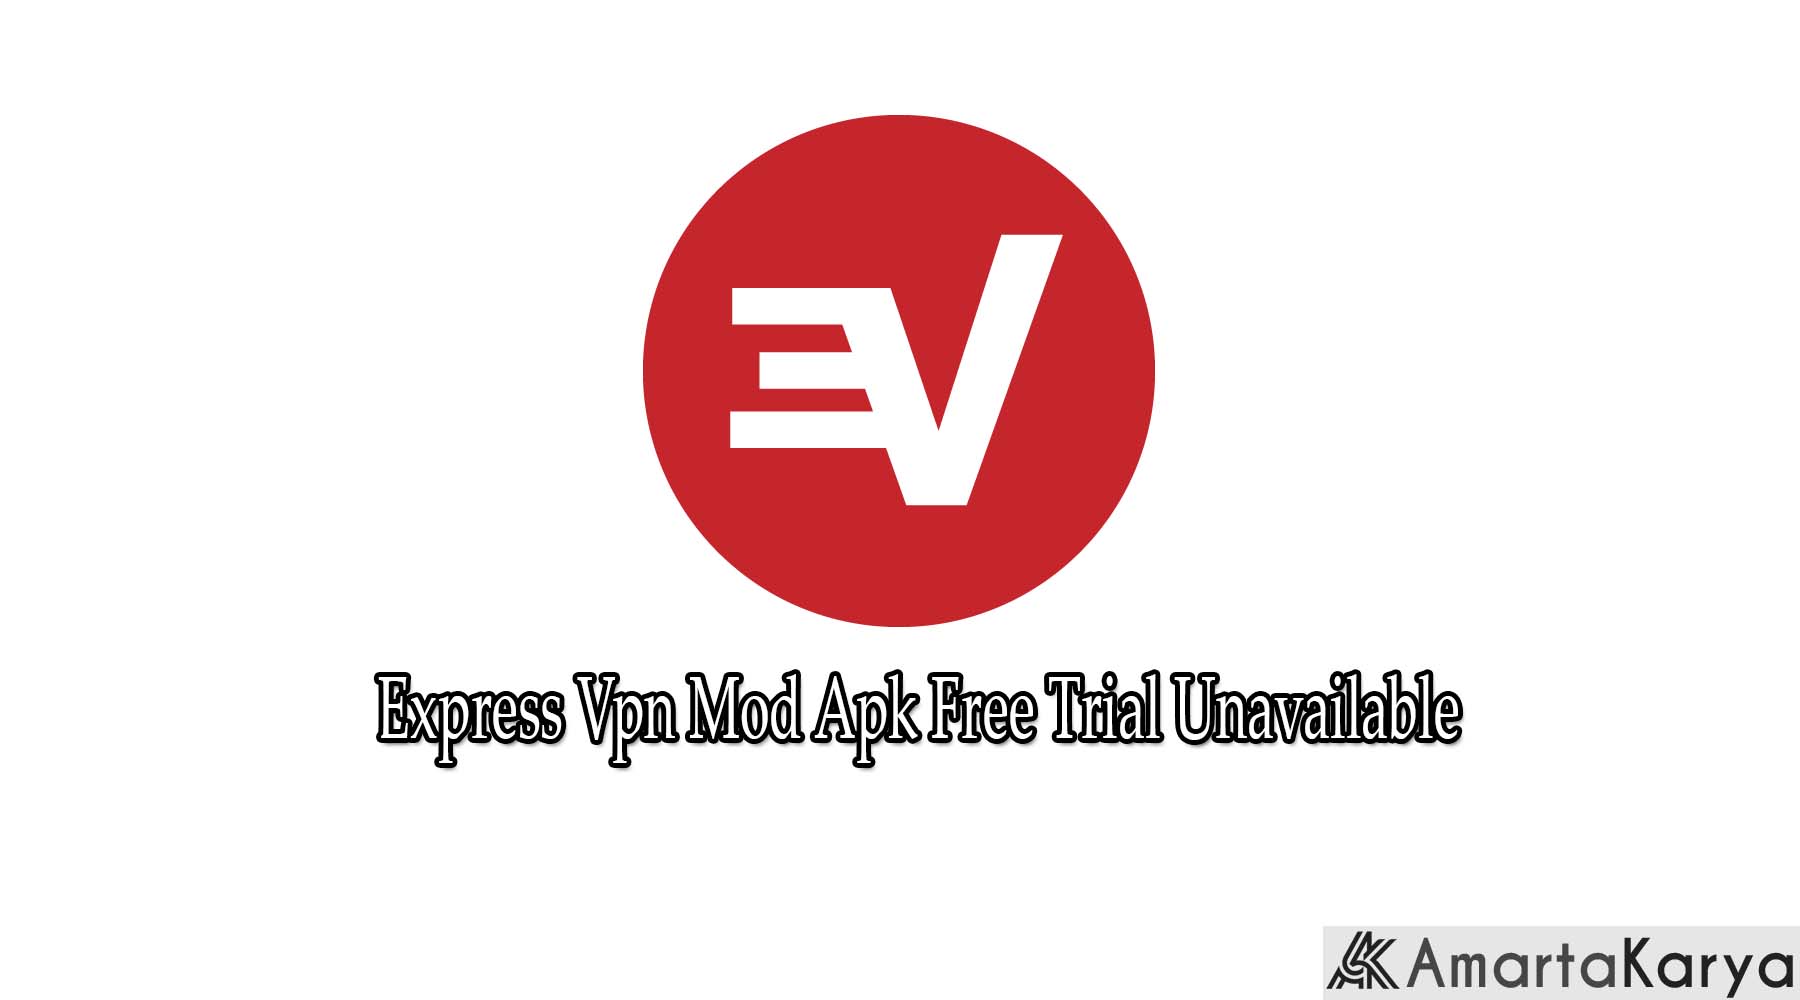 Express Vpn Mod Apk Free Trial Unavailable